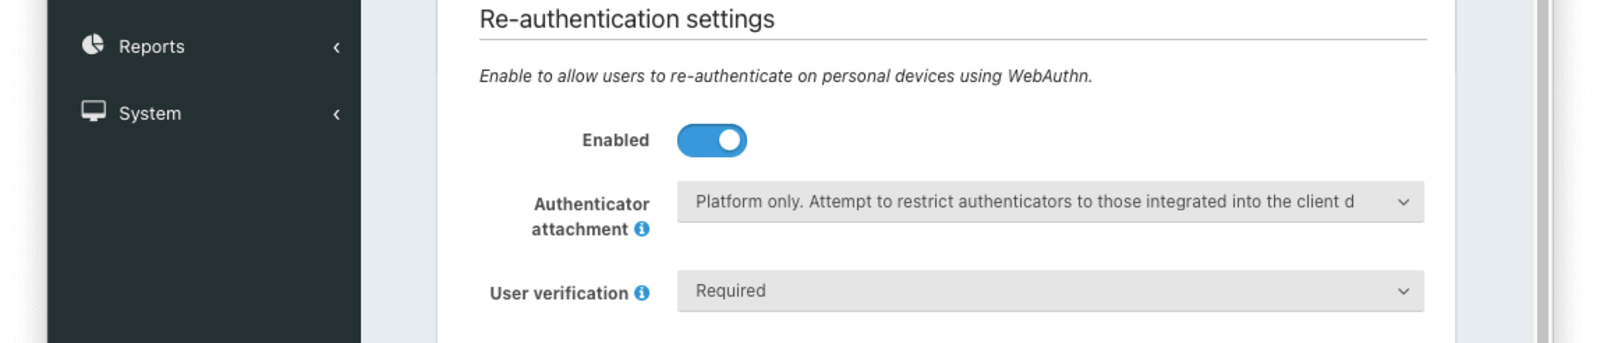 Tenant Configuration - WebAuthn Re-authentication settings